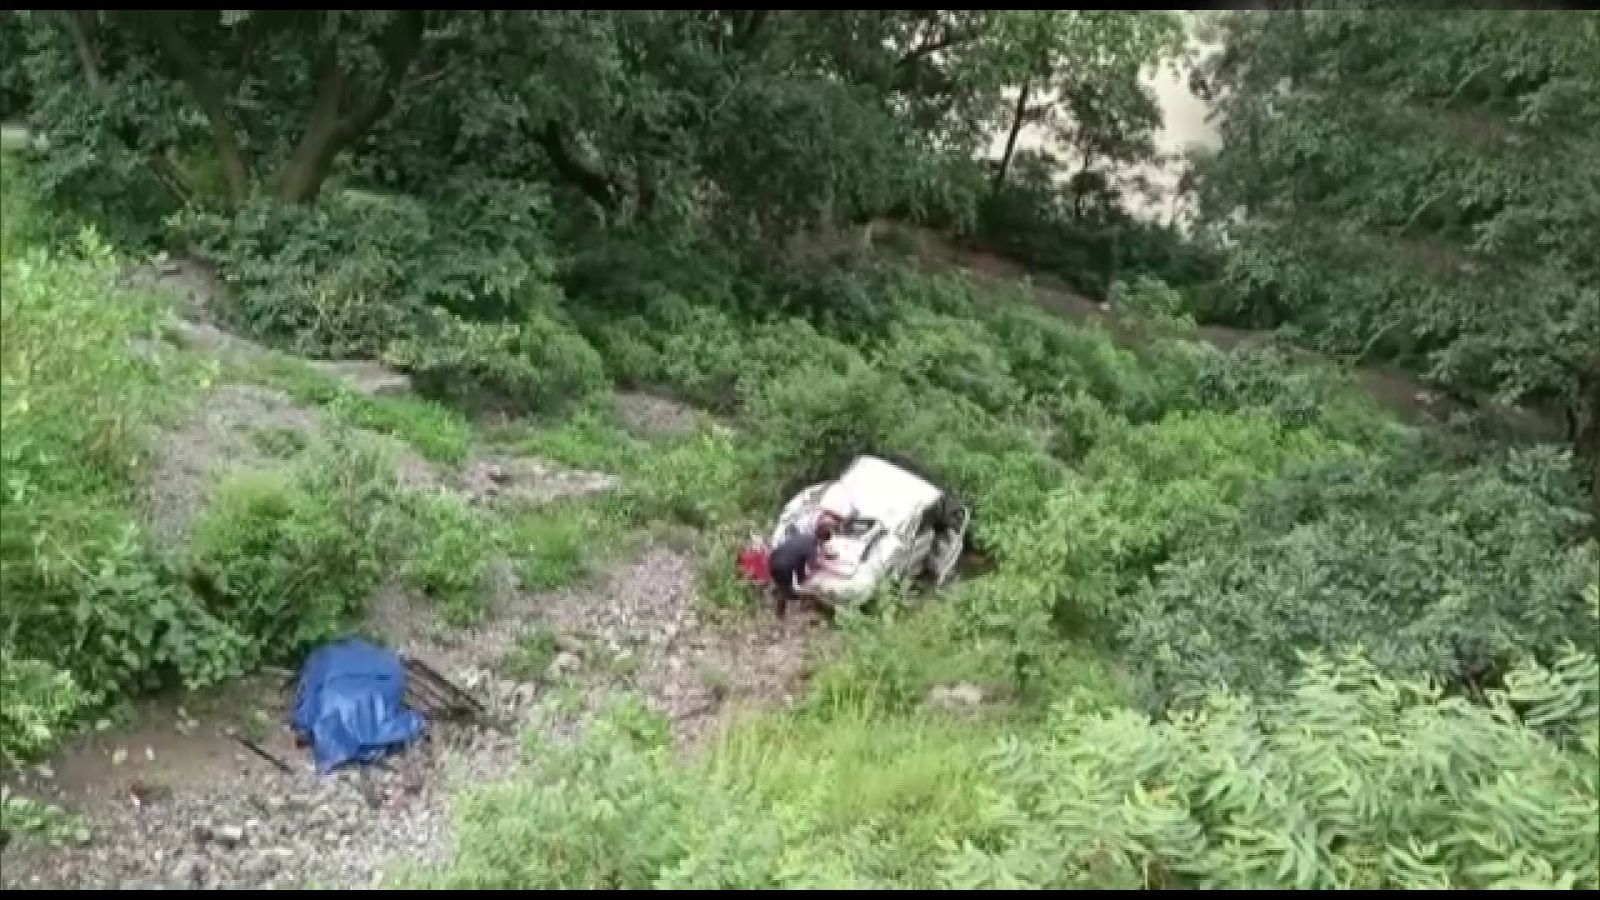 Major Accident On Rishikesh-Badrinath Road In Uttarakhand